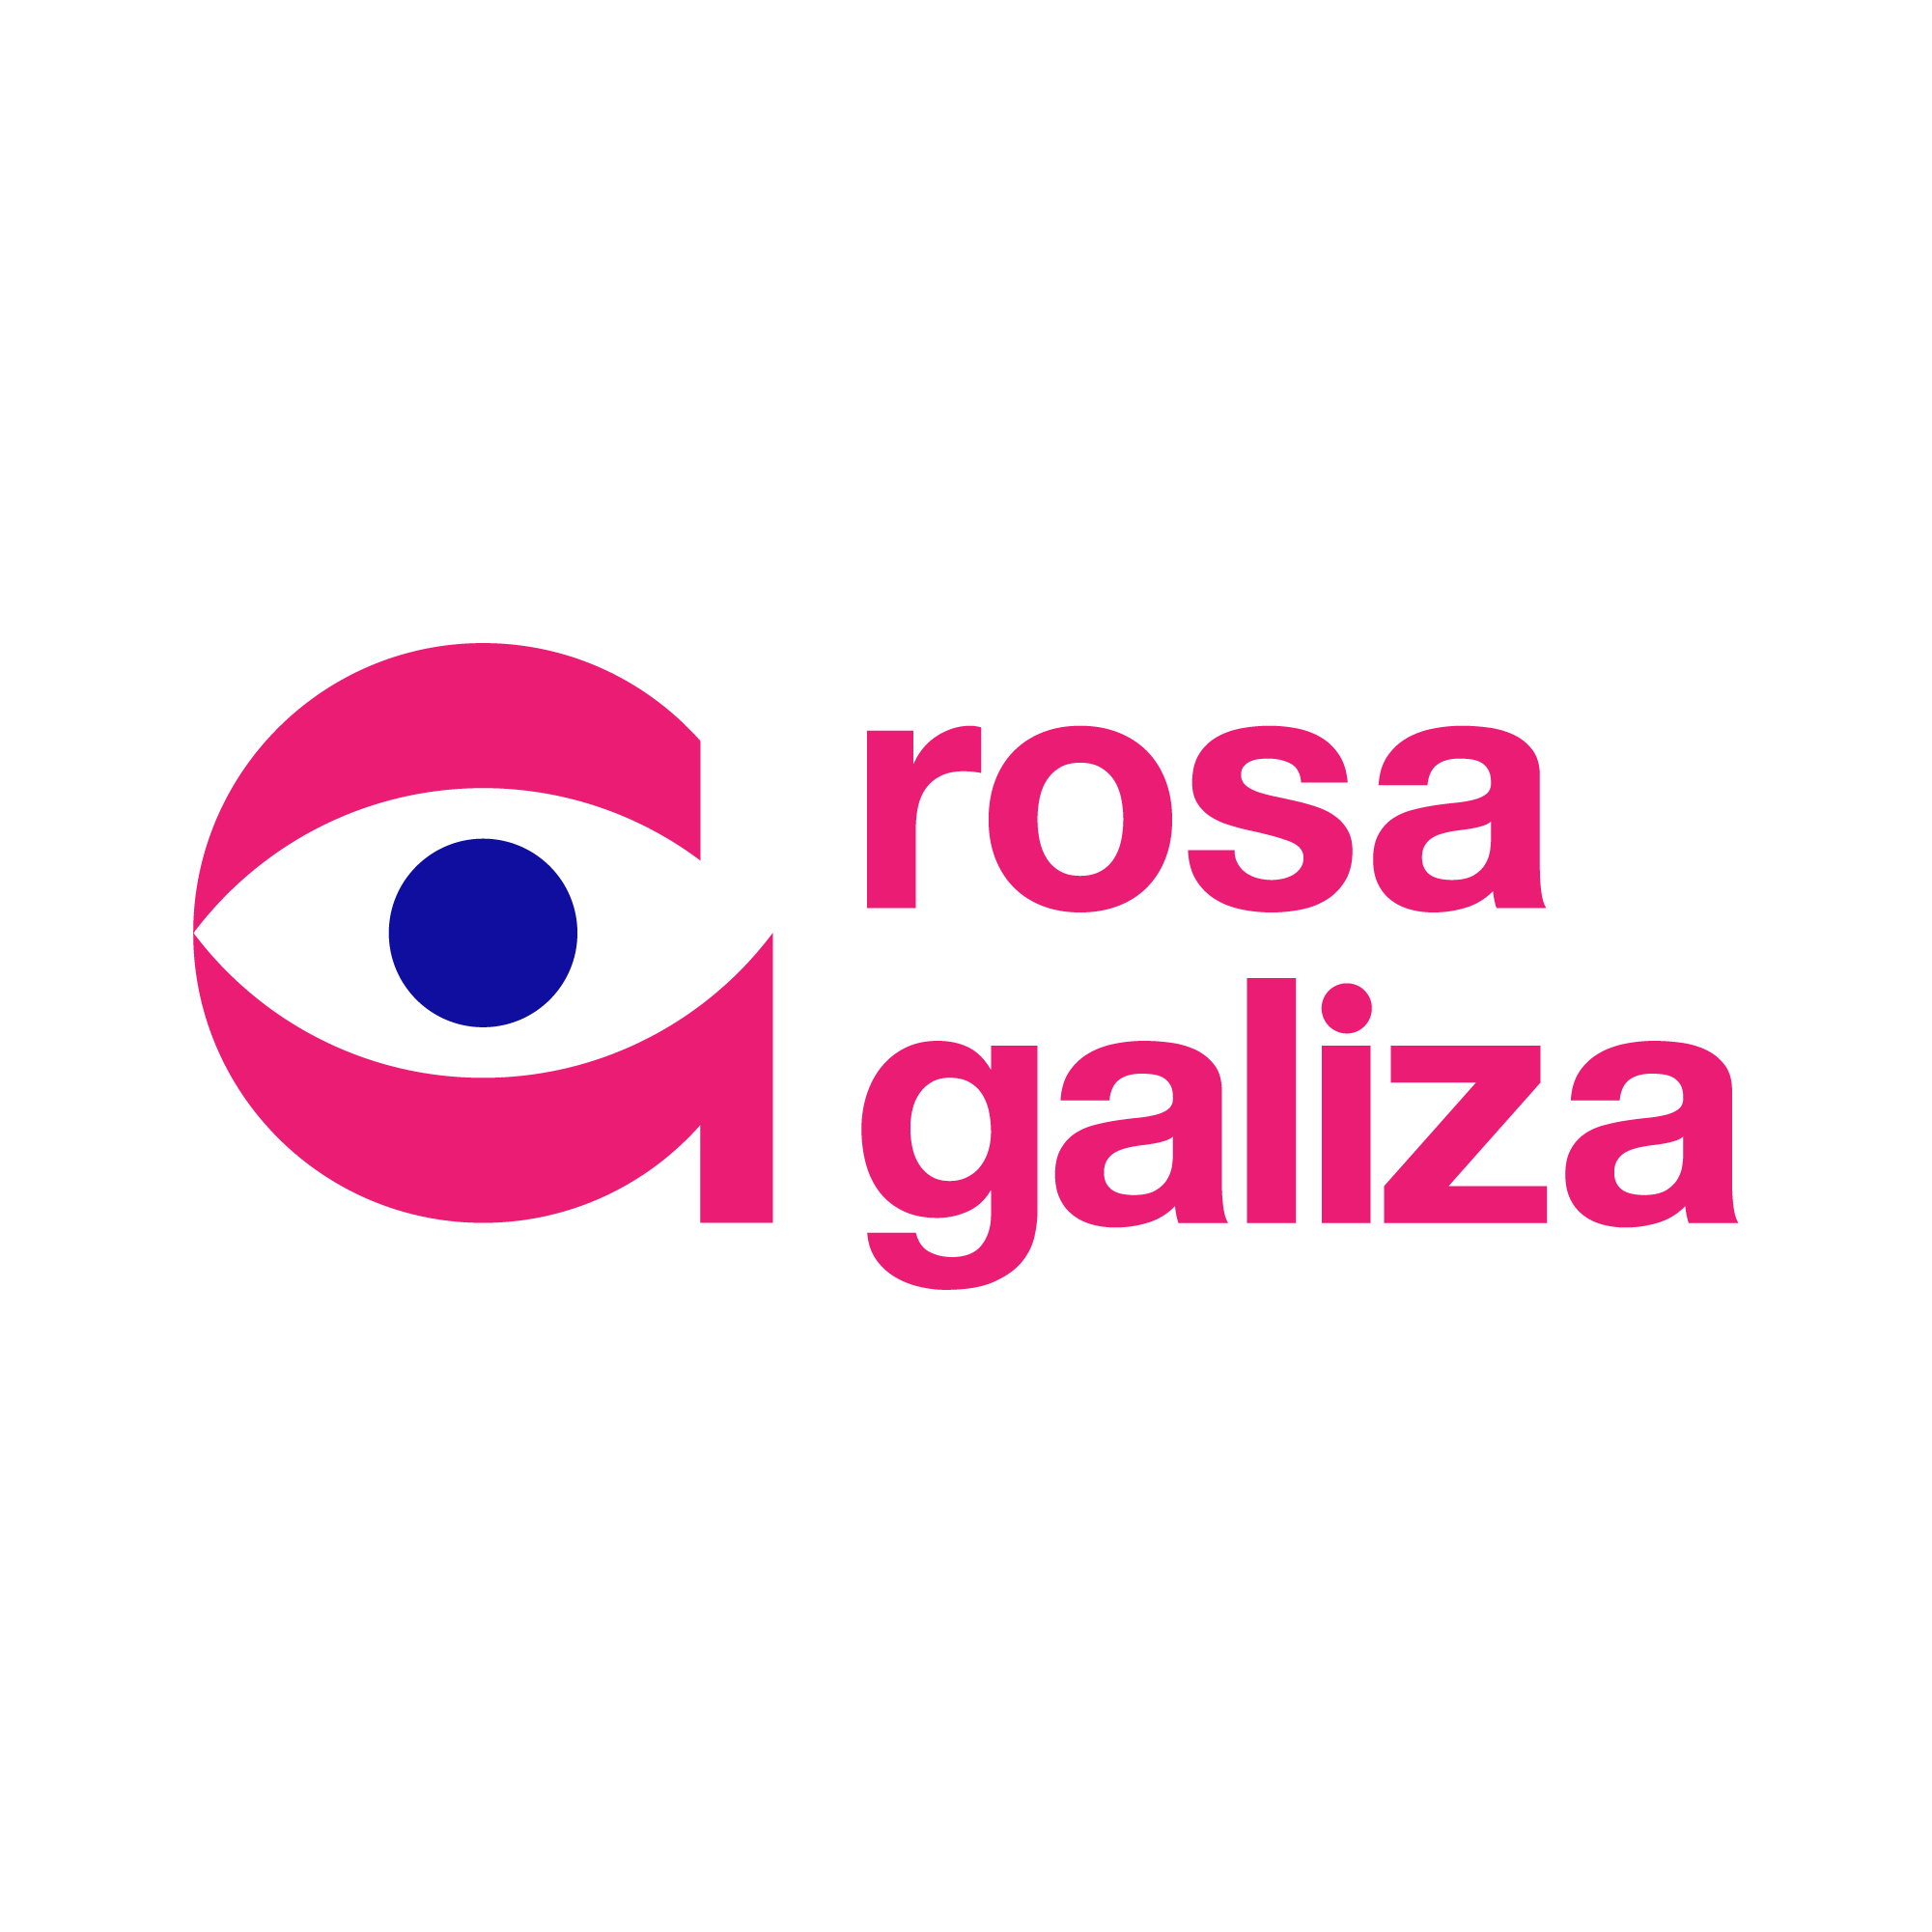 ROSA GALIZA - lettering (2020)